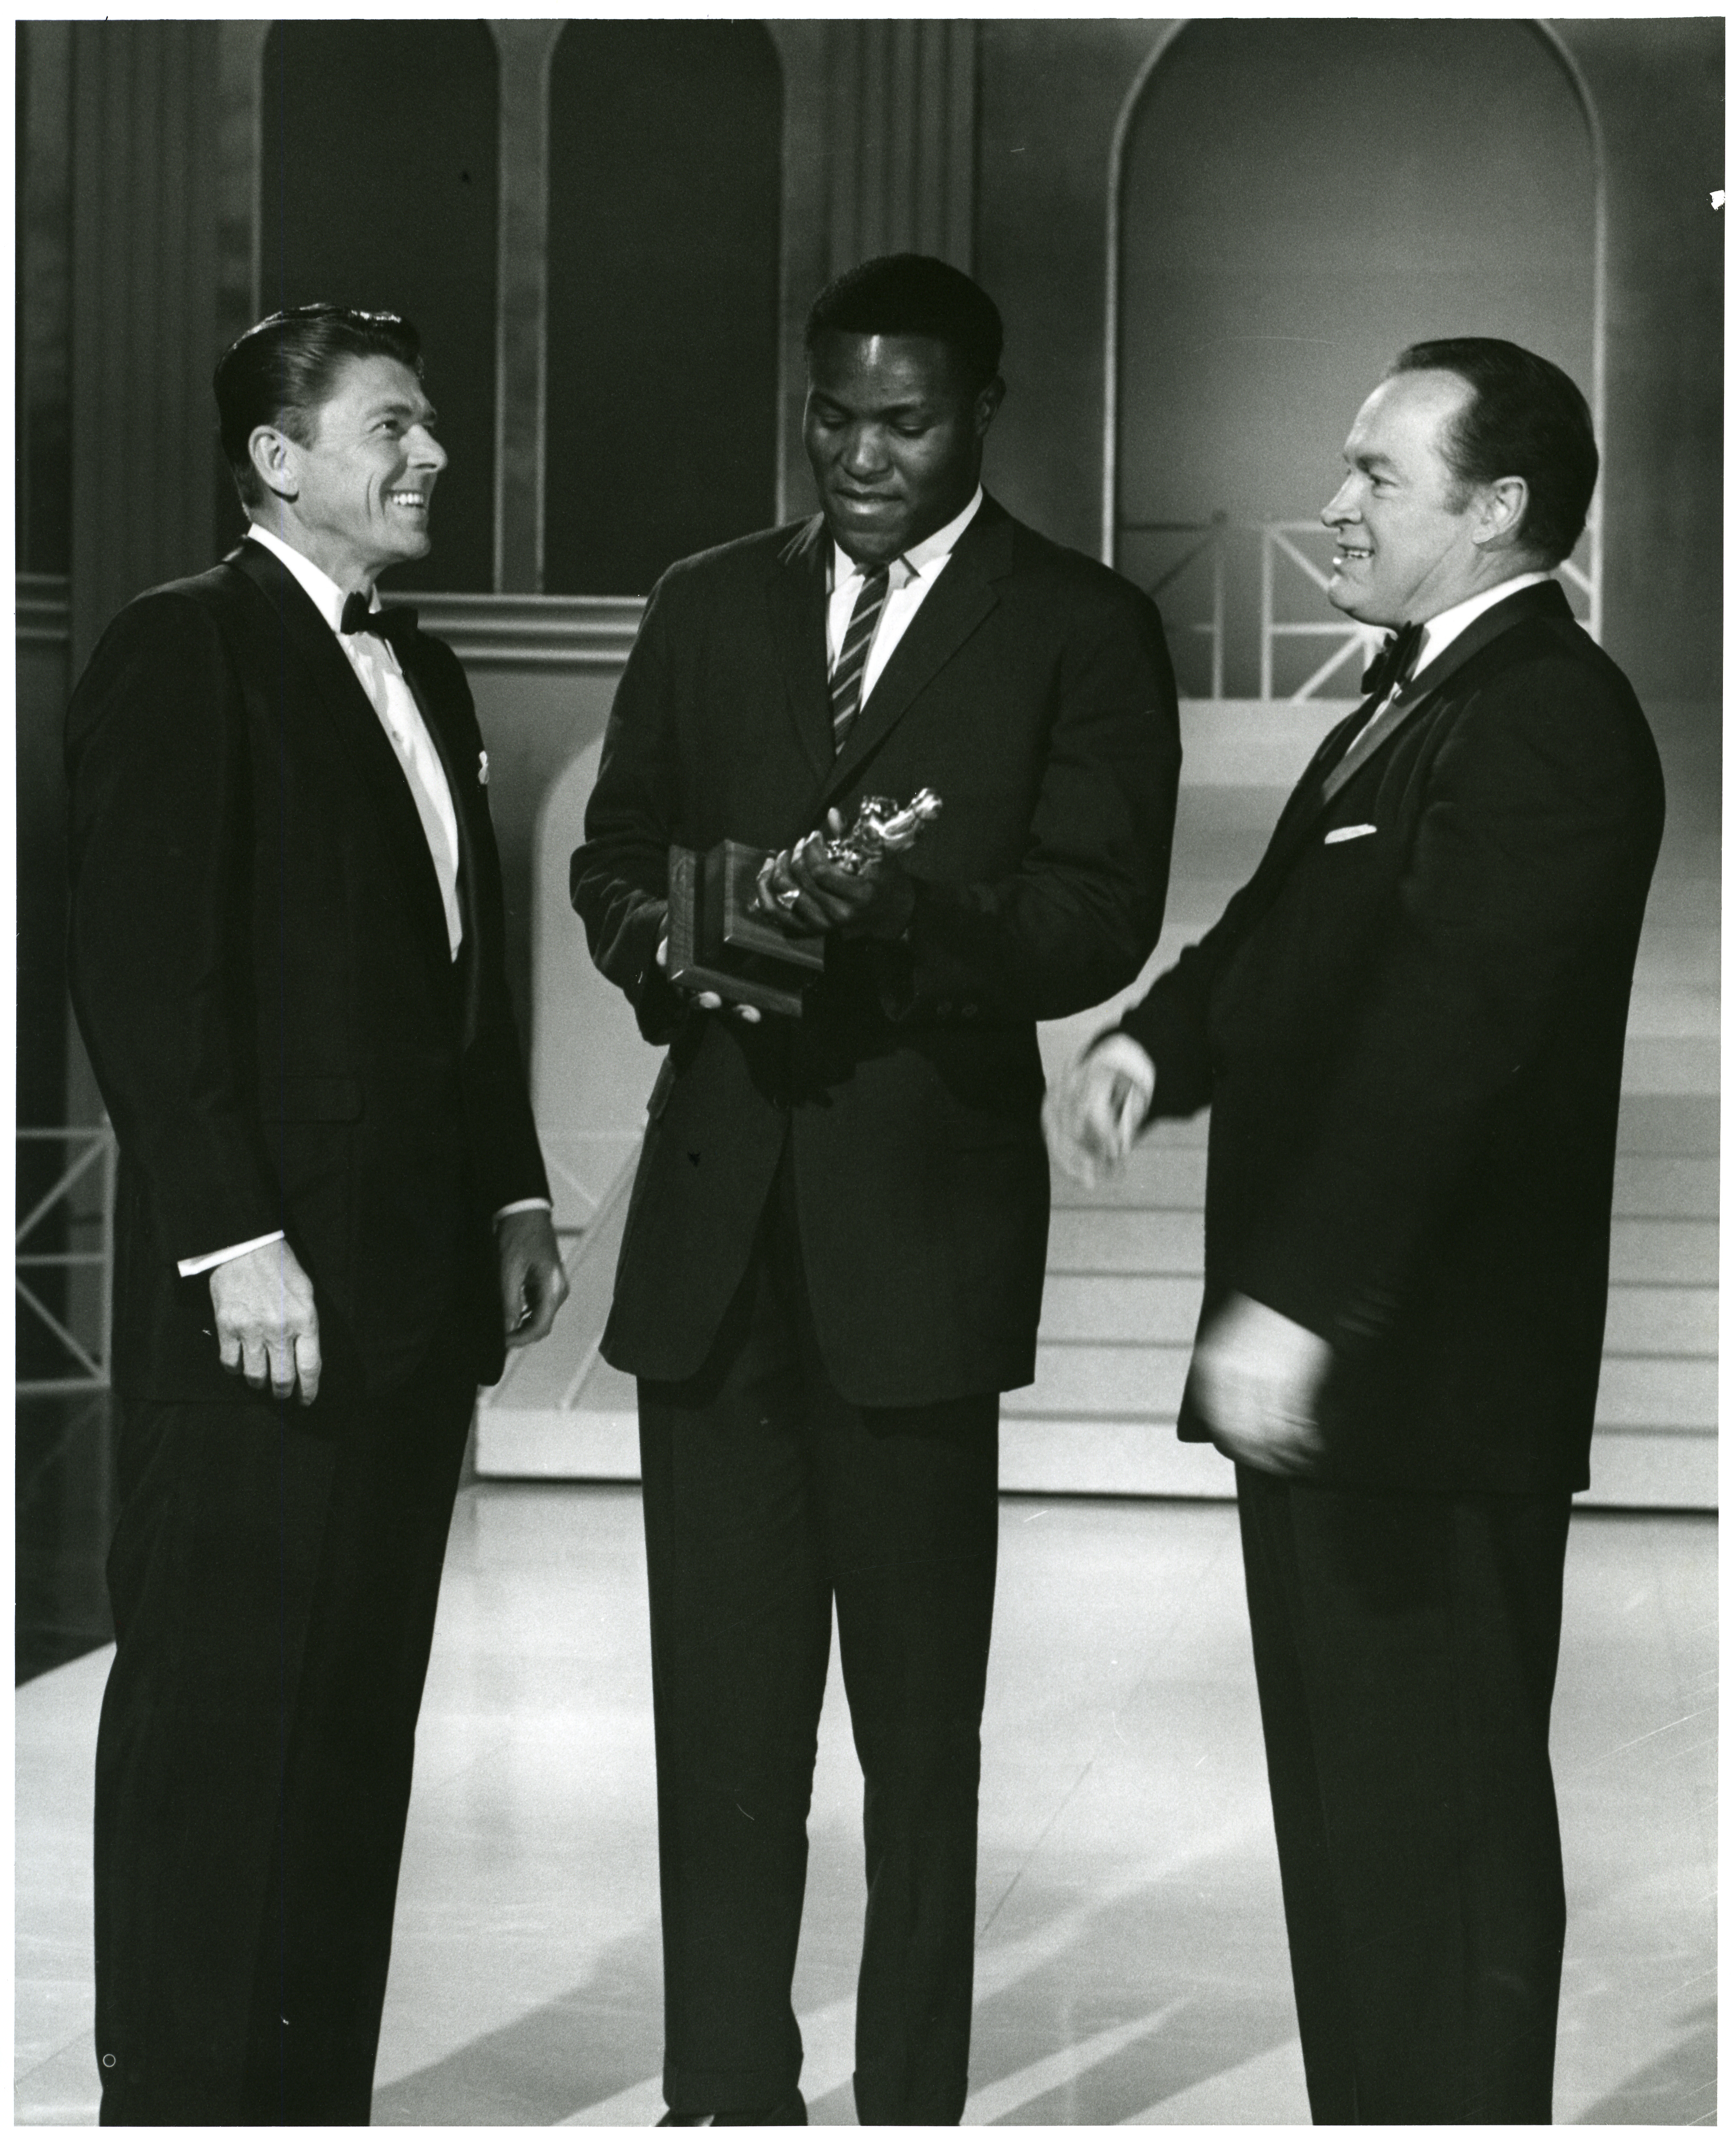 Ronald Reagan, Bob Hope and Rafer Johnson at unknown awards show